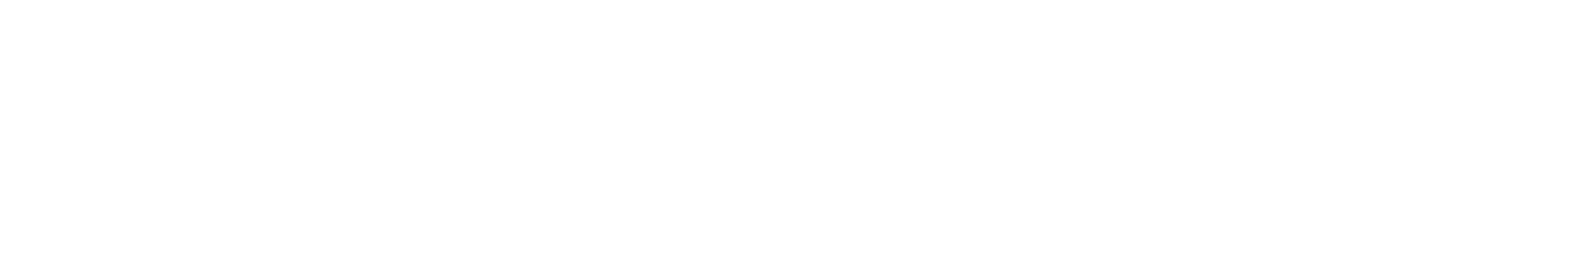 Cirrus Logic
 logo large for dark backgrounds (transparent PNG)